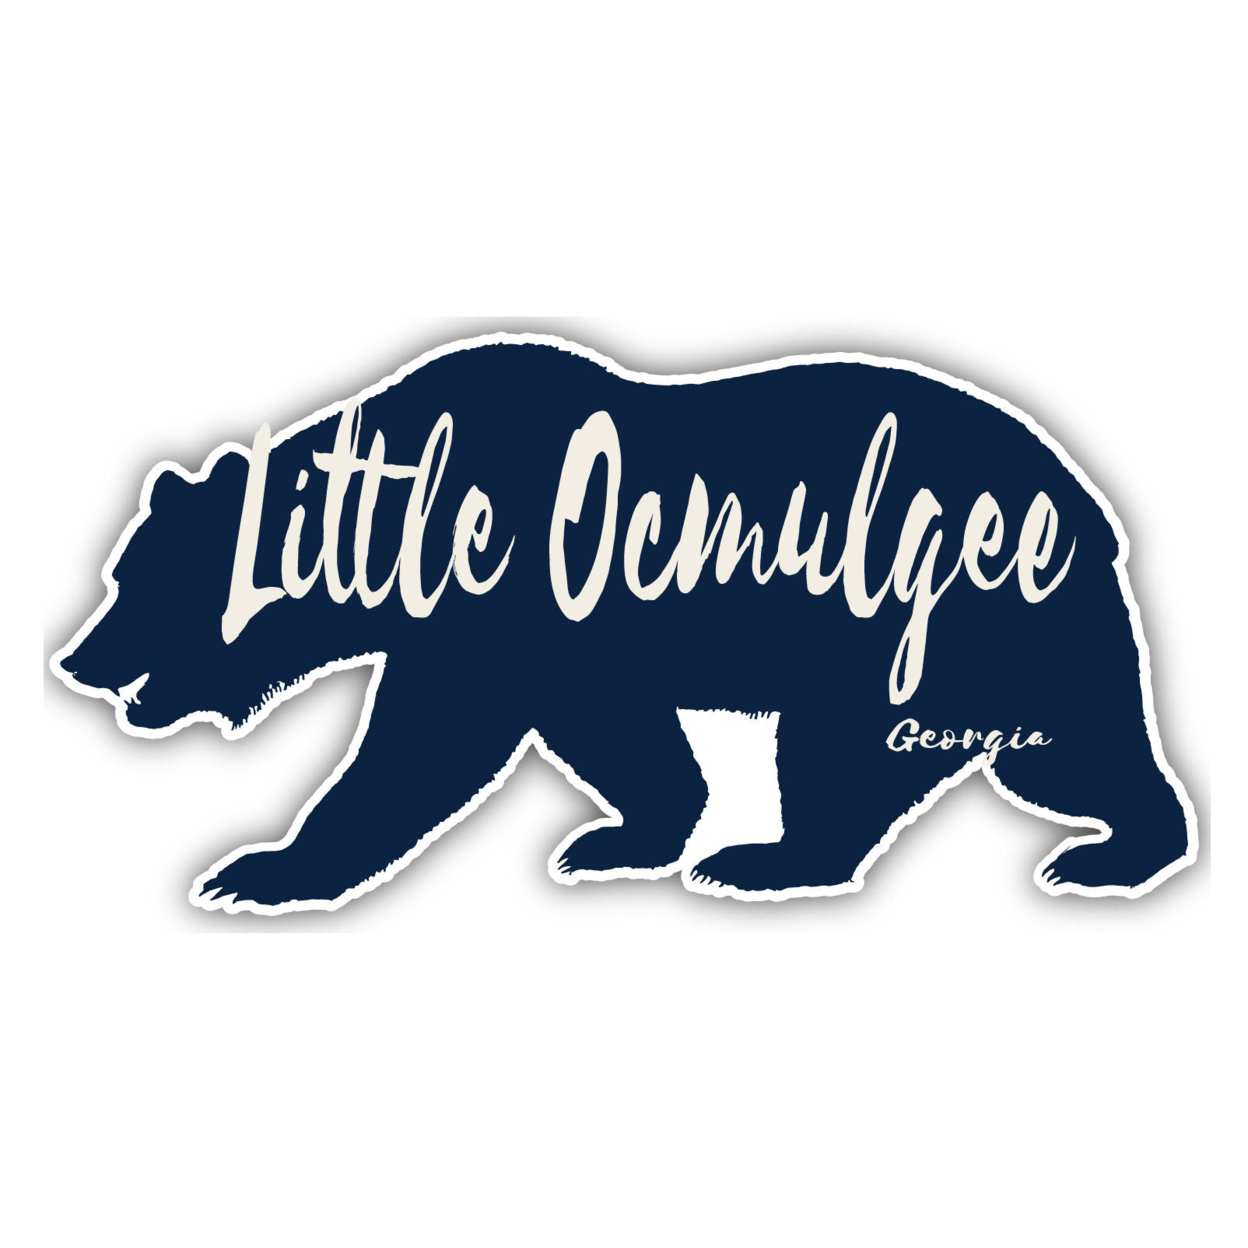 Little Ocmulgee Georgia Souvenir Decorative Stickers (Choose Theme And Size) - 4-Inch, Bear